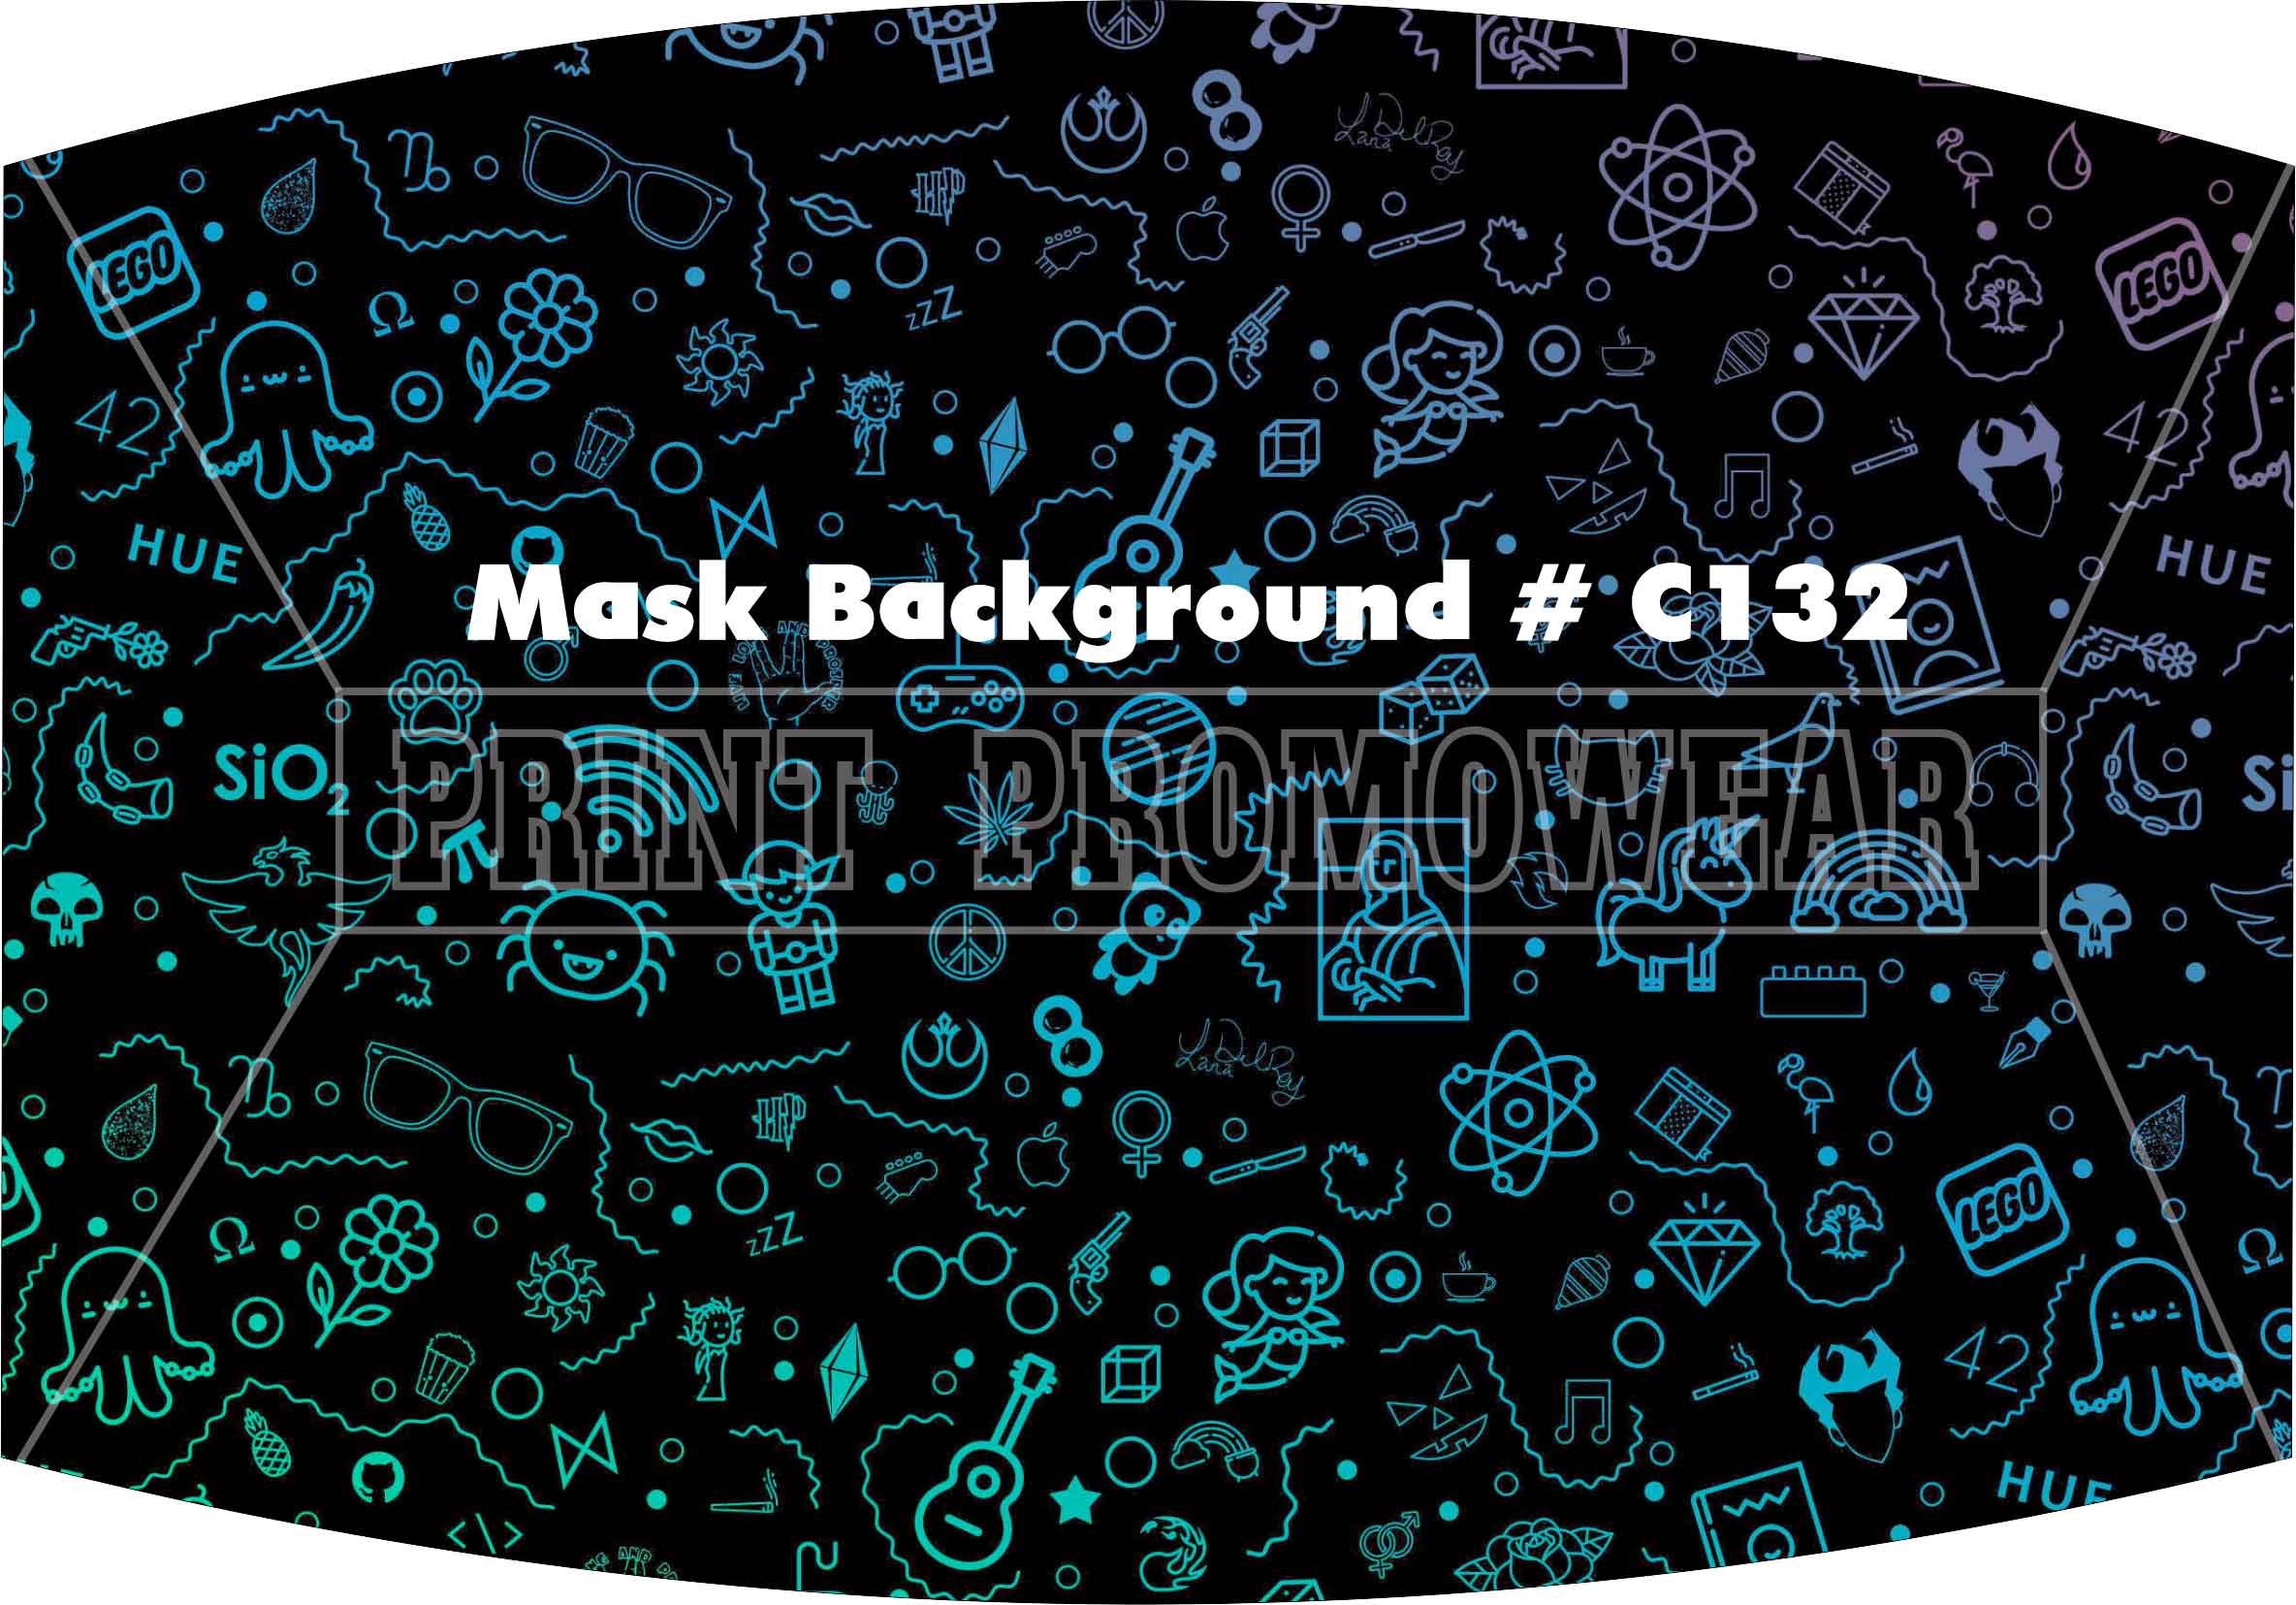 Image/MaskBackground/c132.jpg